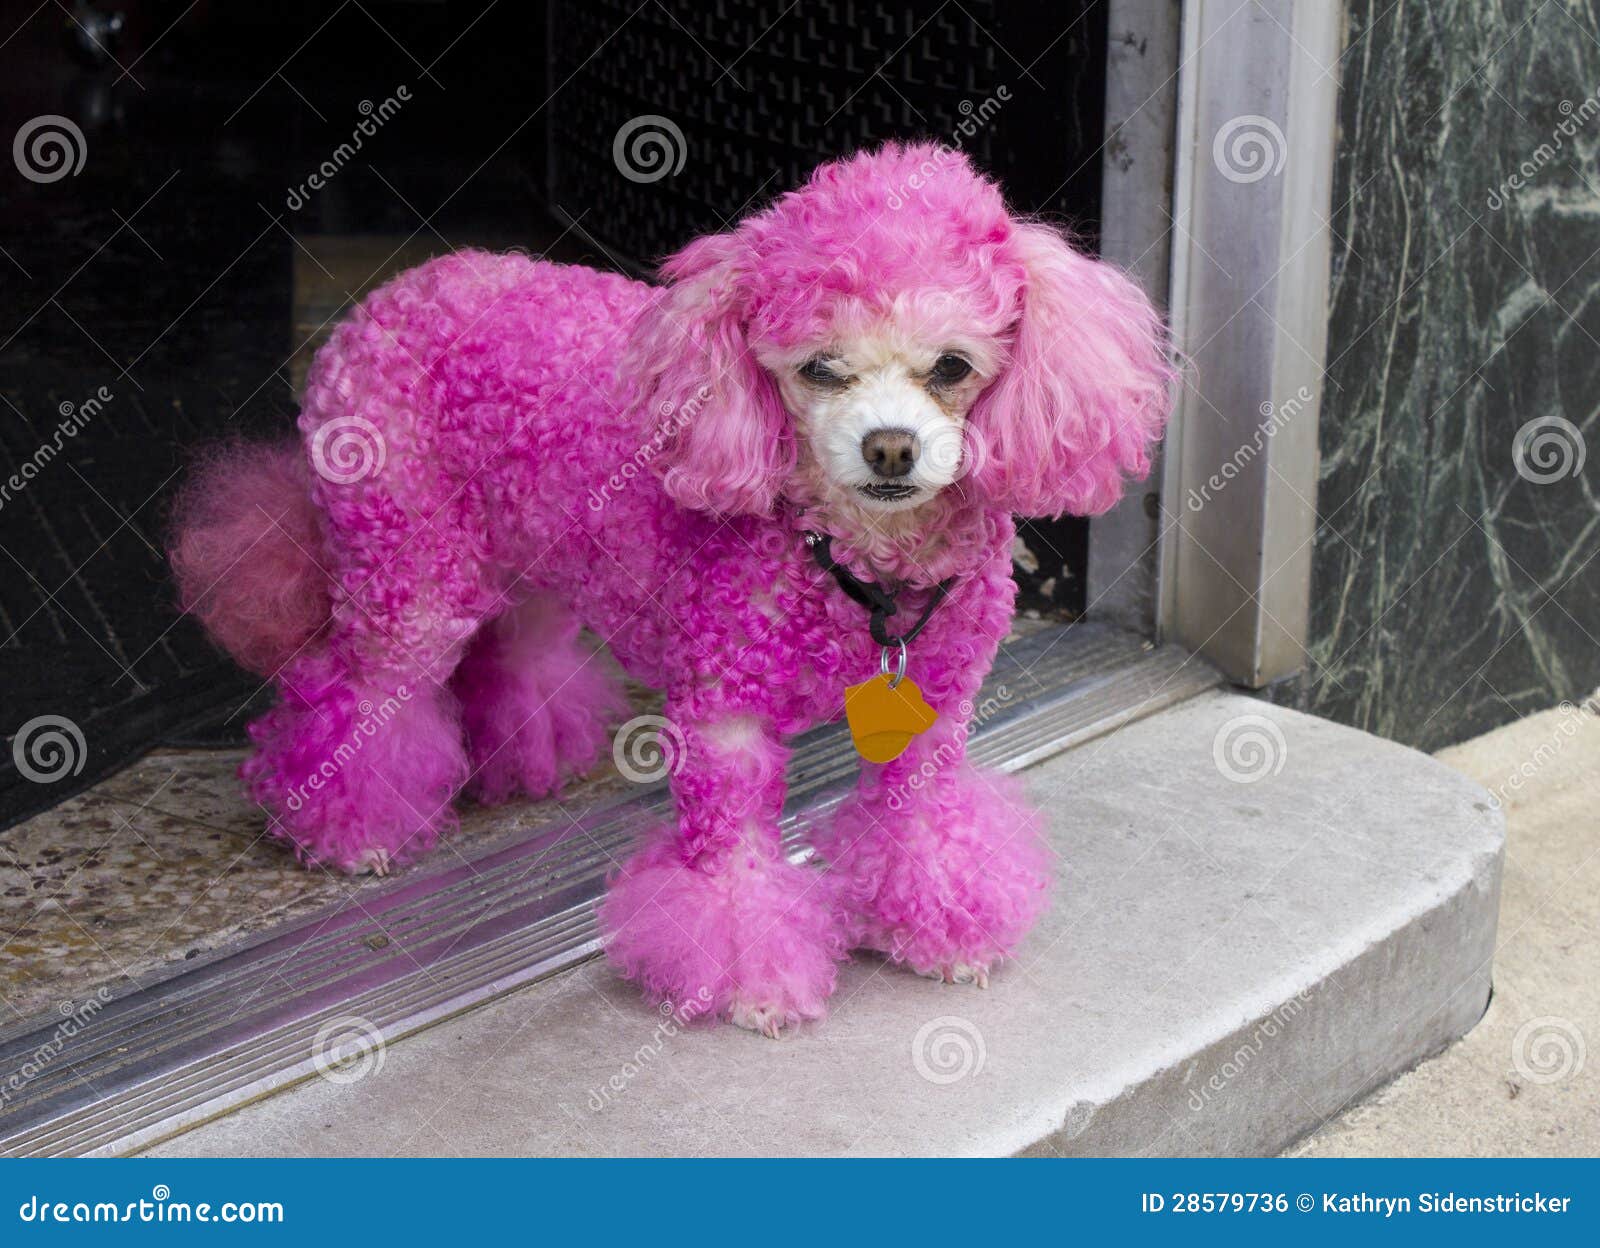 miniature pink poodle in doorway